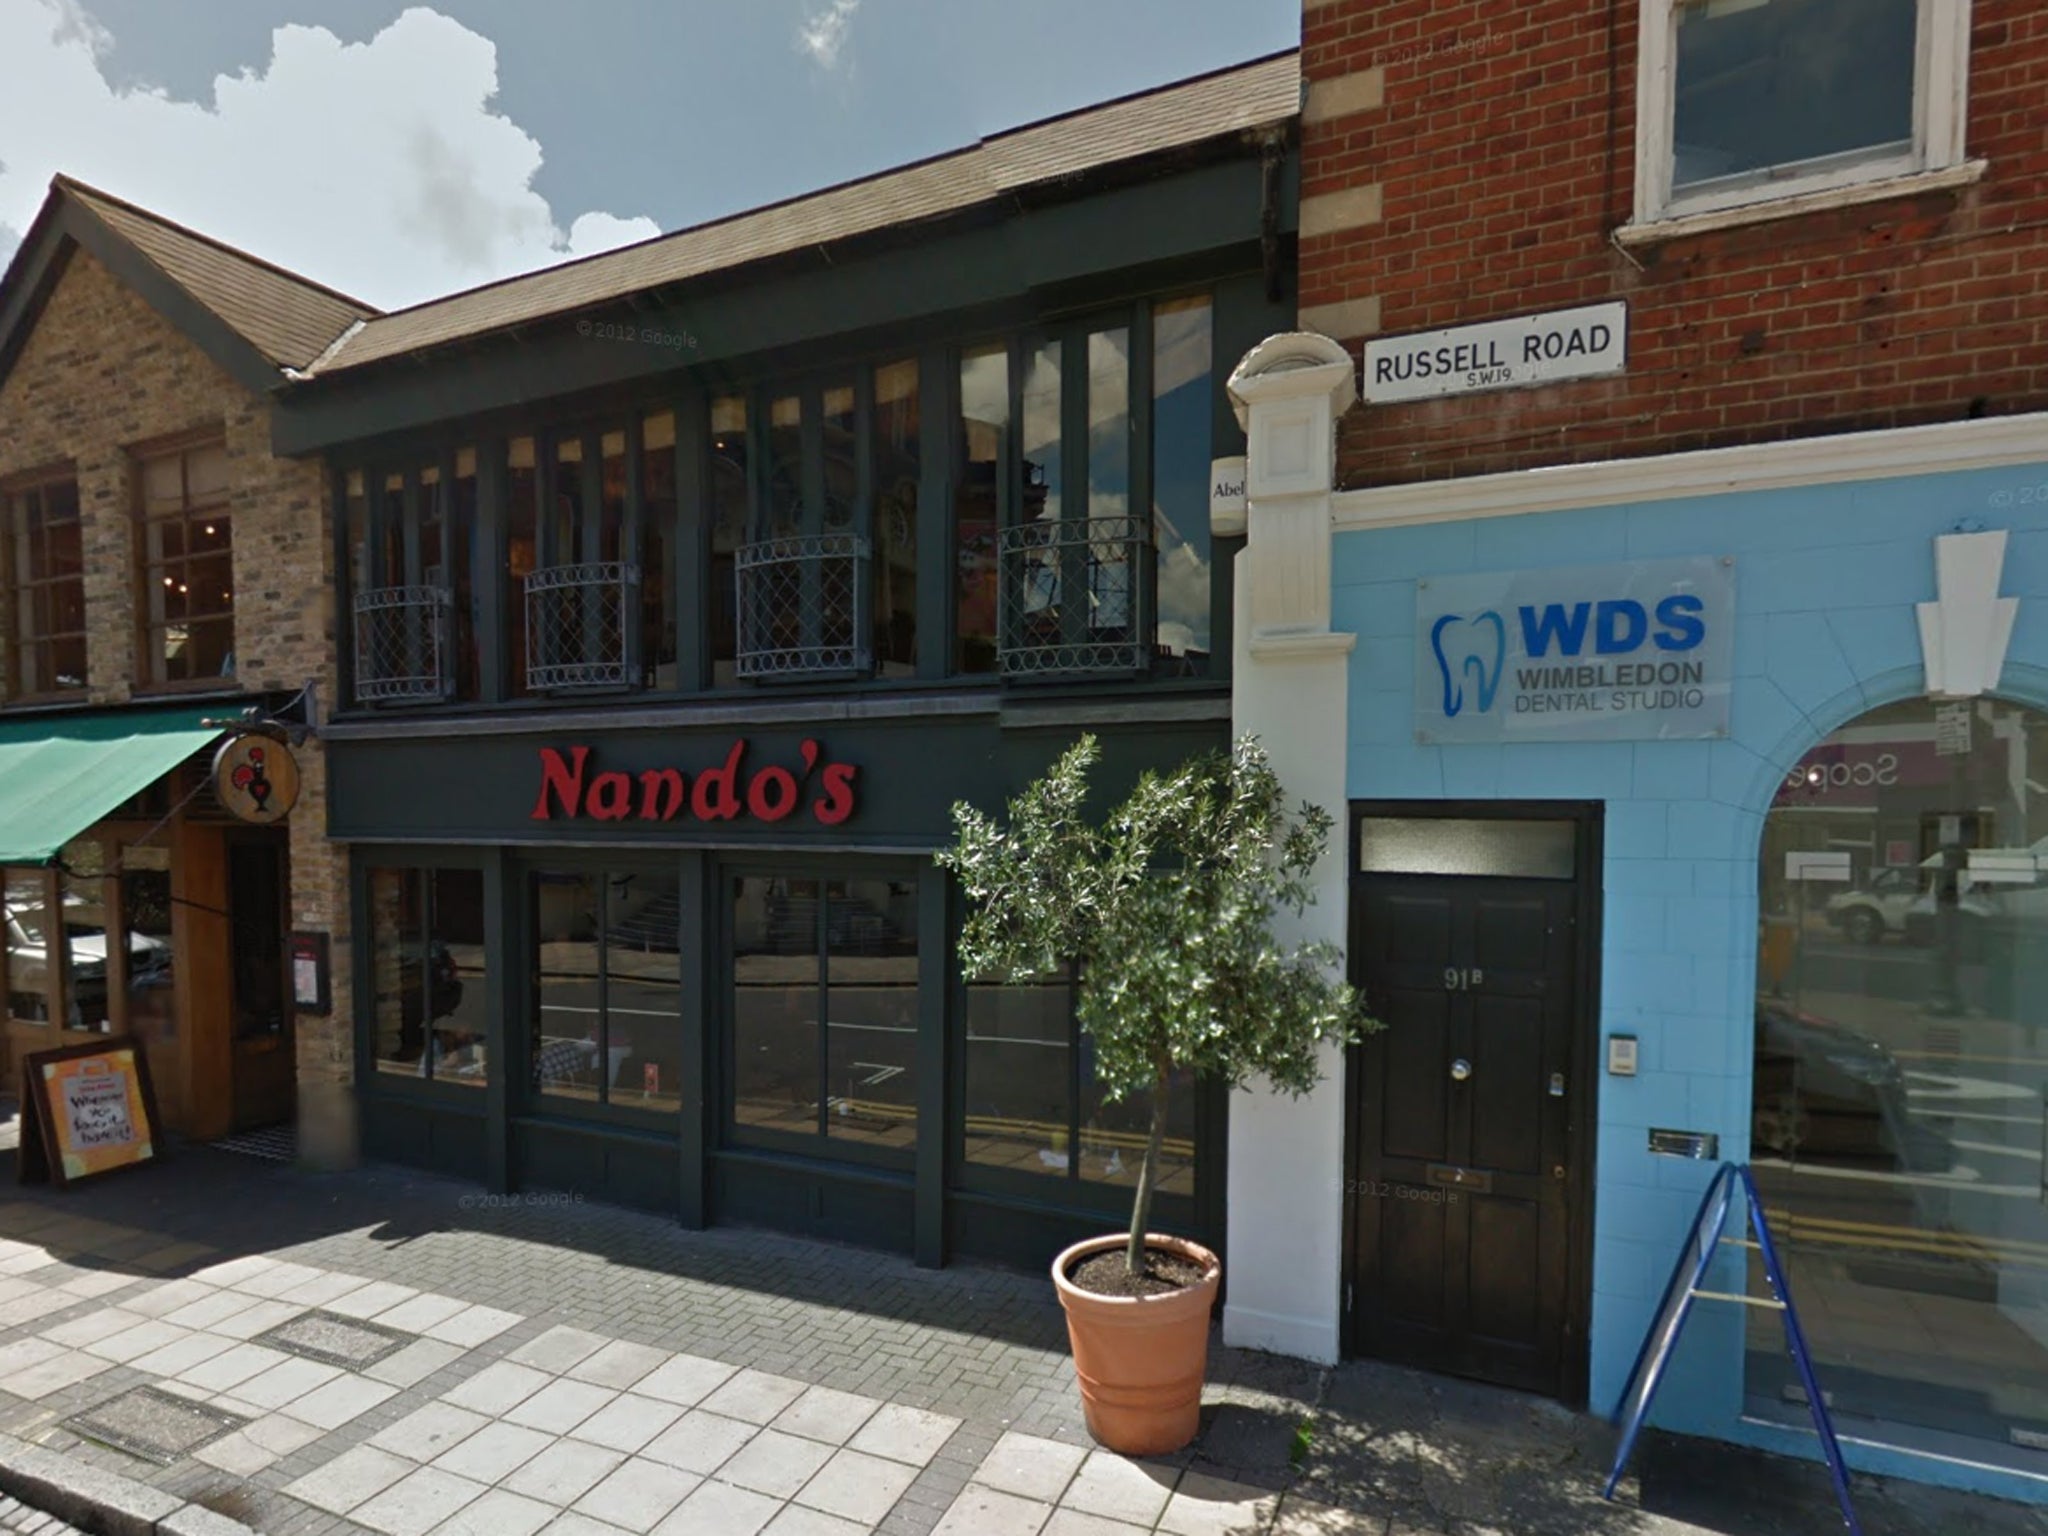 A Nandos branch in Wimbledon. Credit: Google Street View